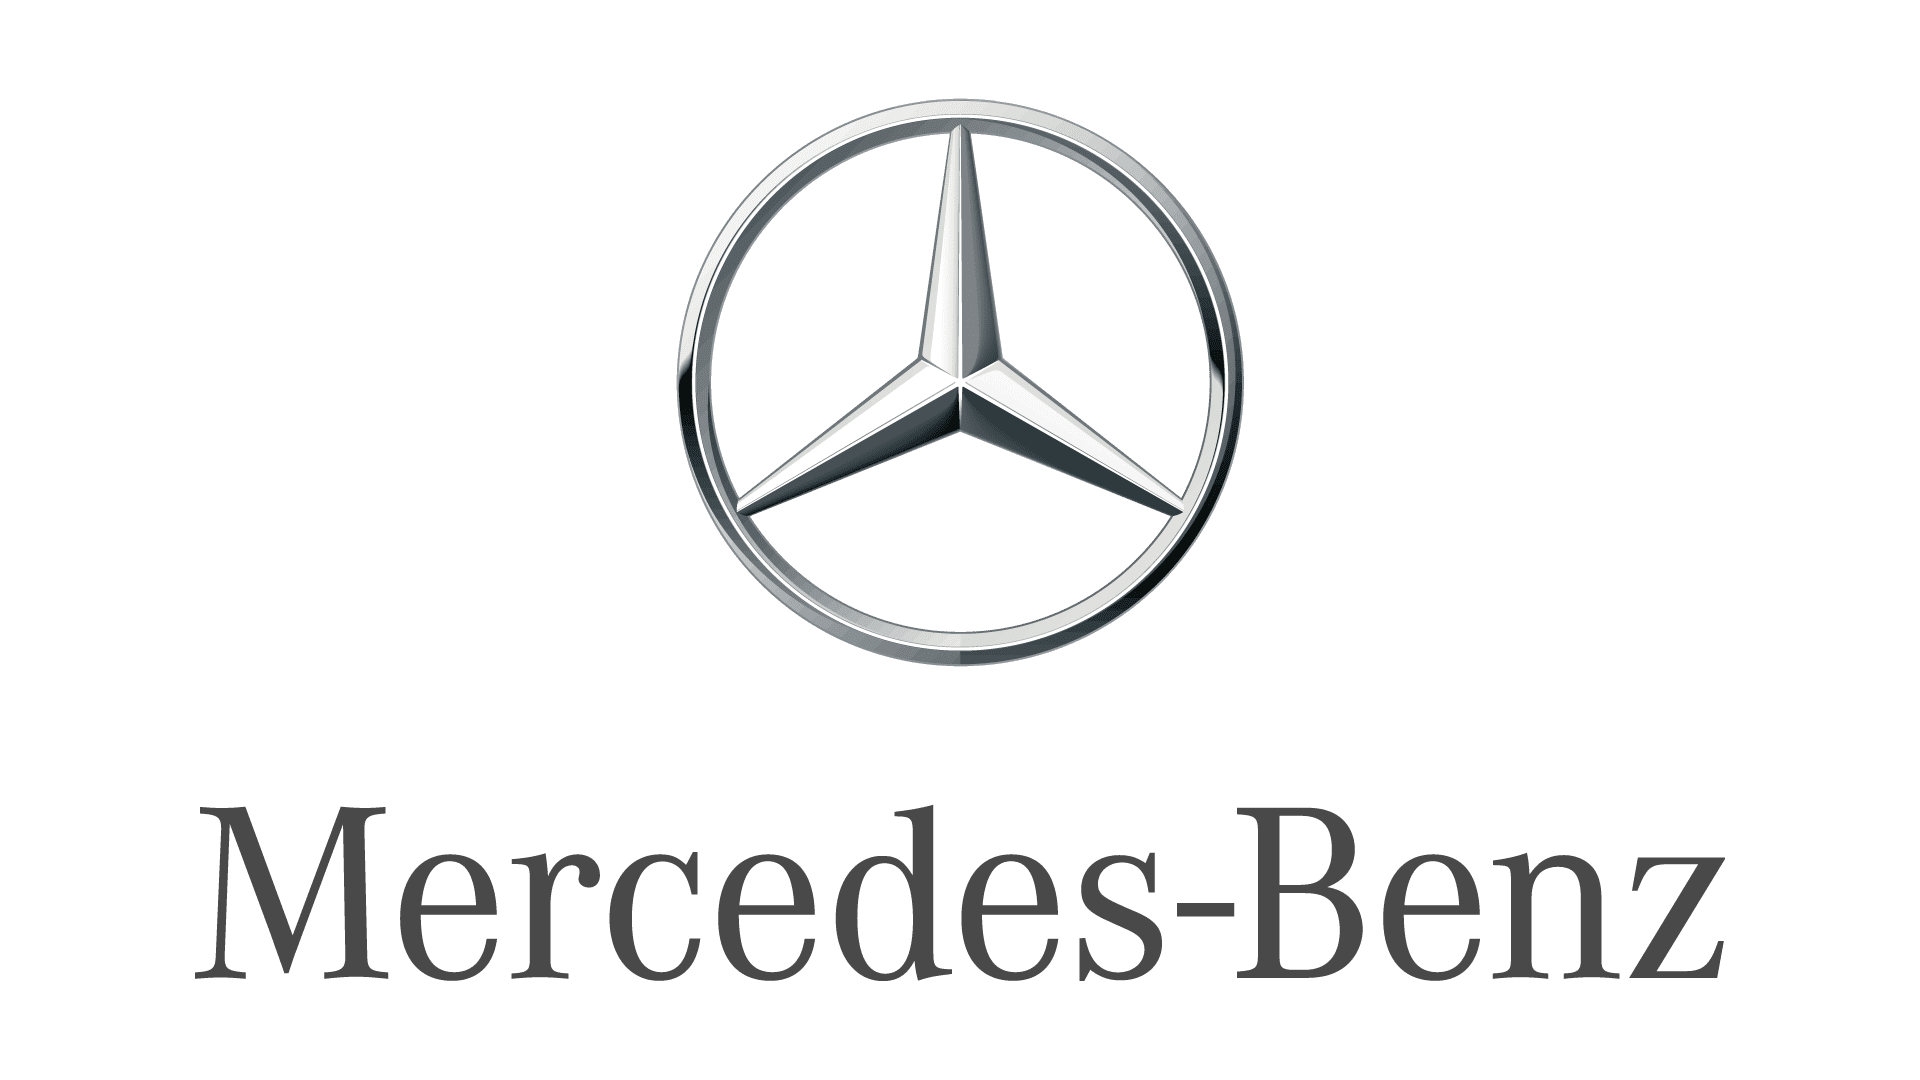 Безпека Mercedes-Benz GLC Купе Пакети обладнання функцій безпеки #4